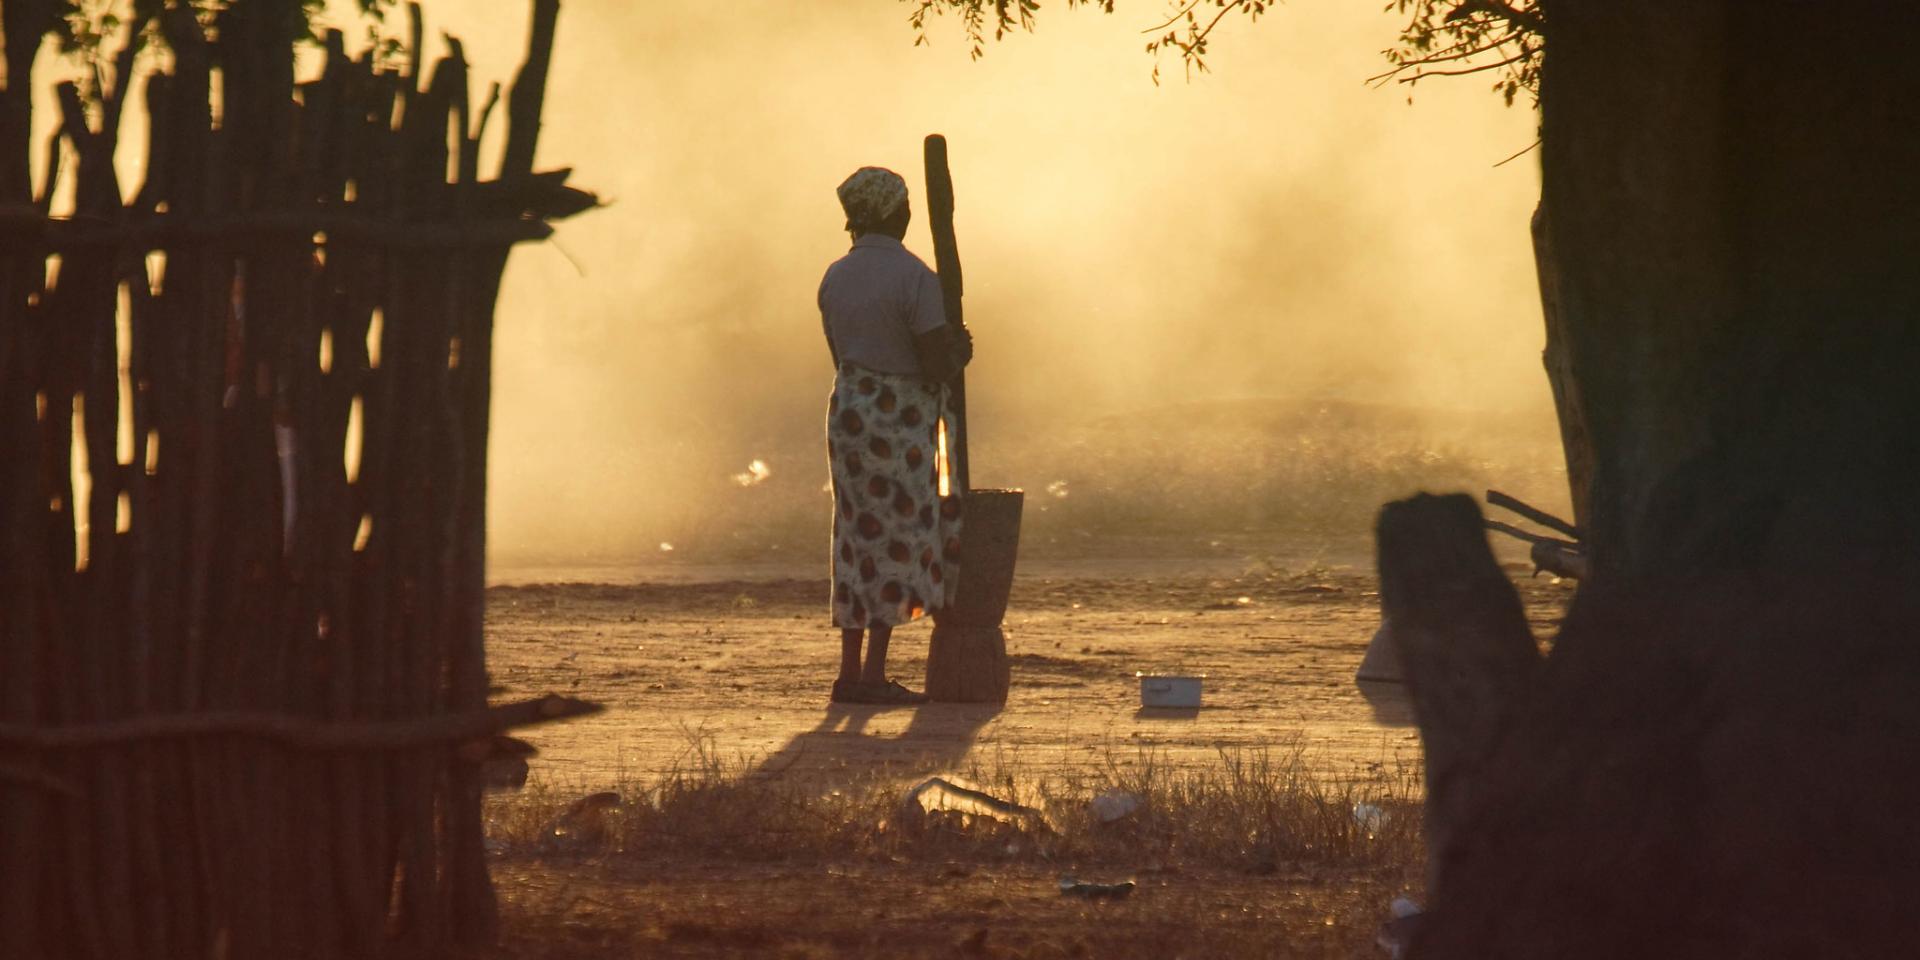 Woman pounding maize in Mozambique